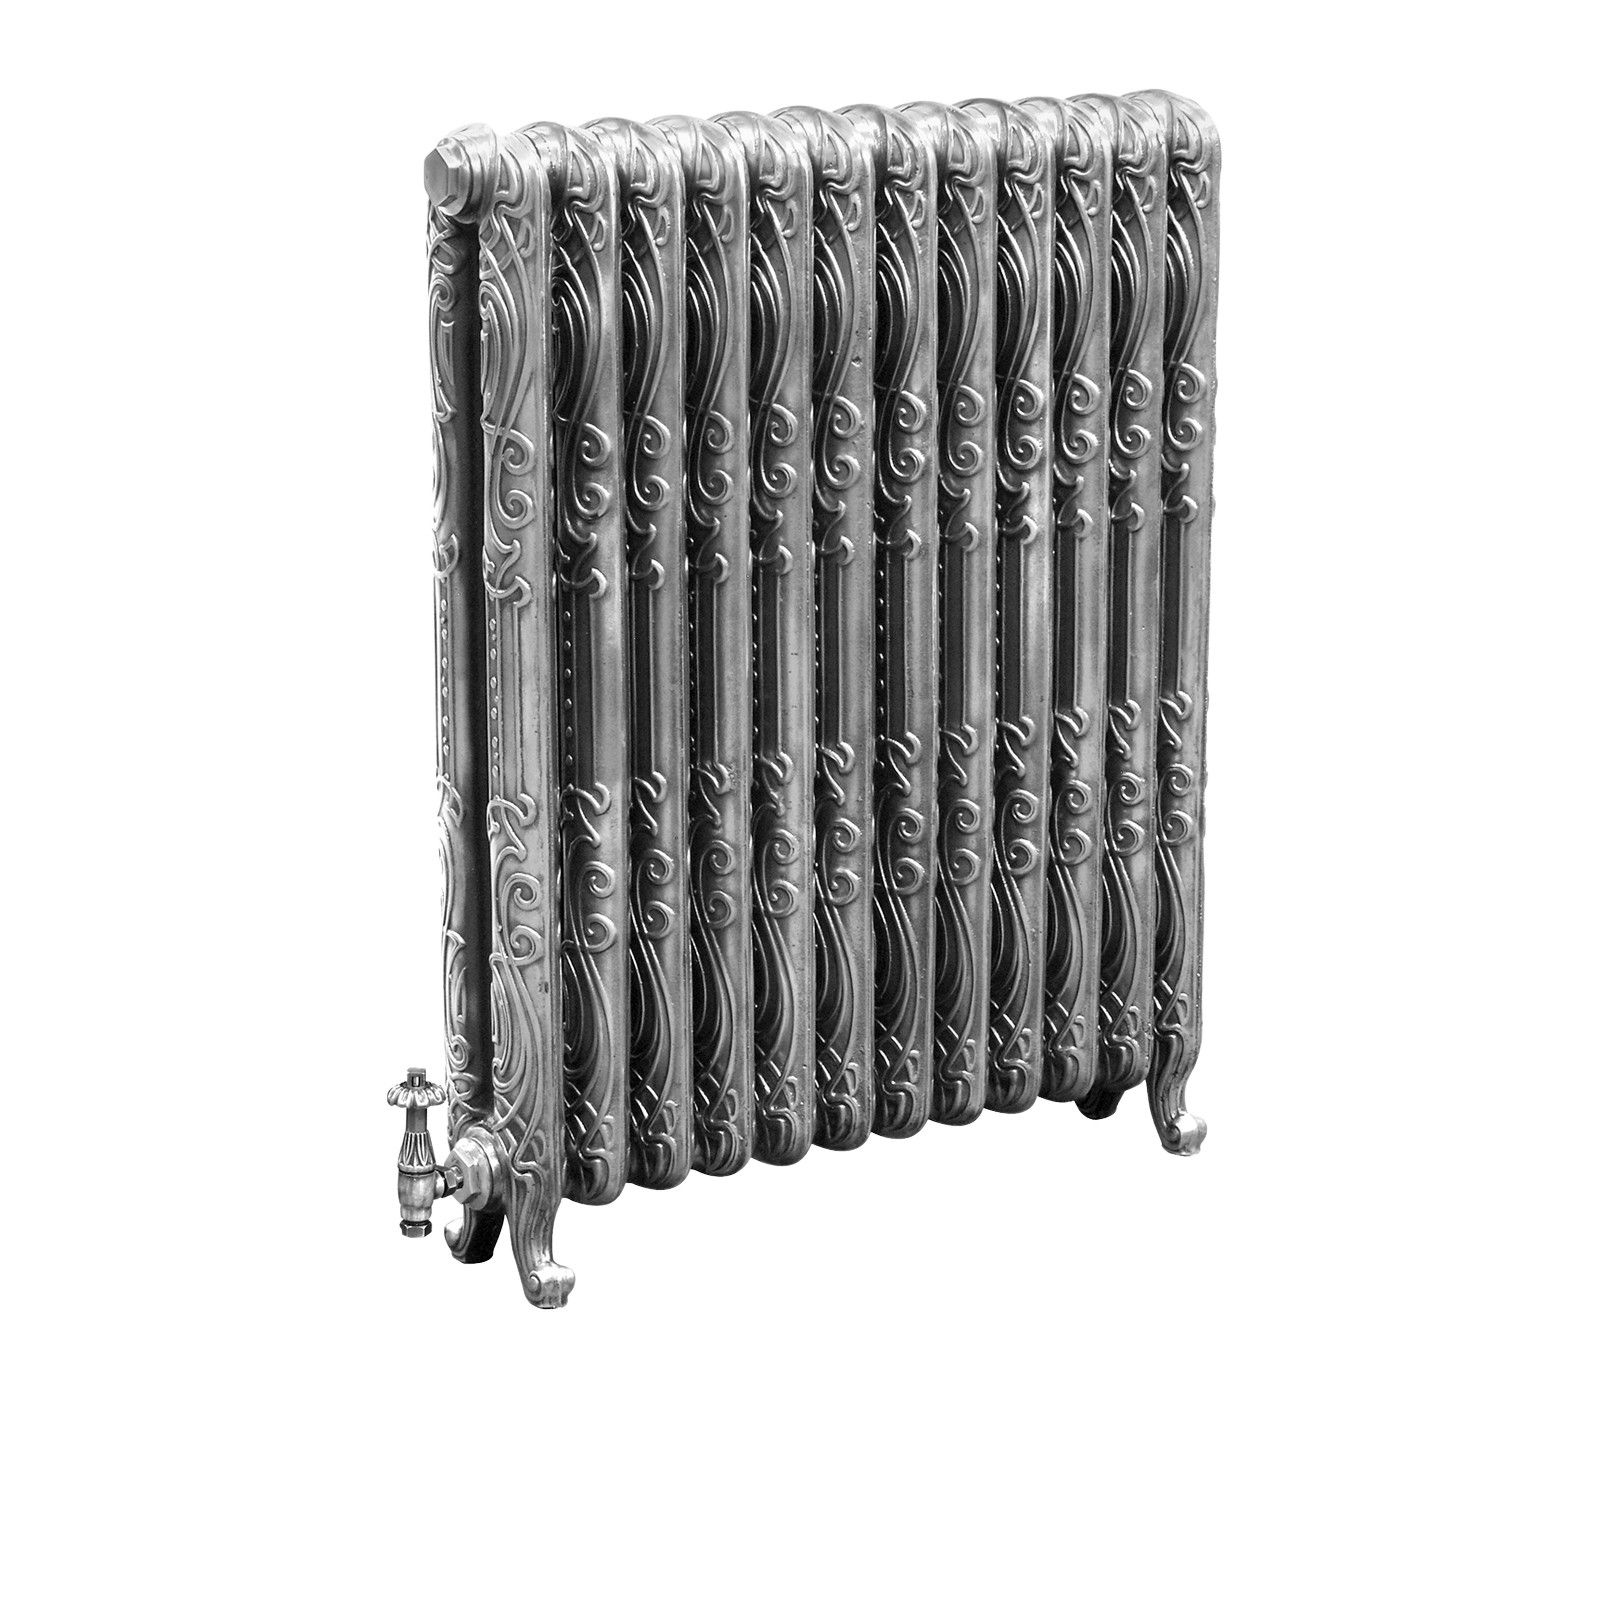 New Orleans radiator 980mm high